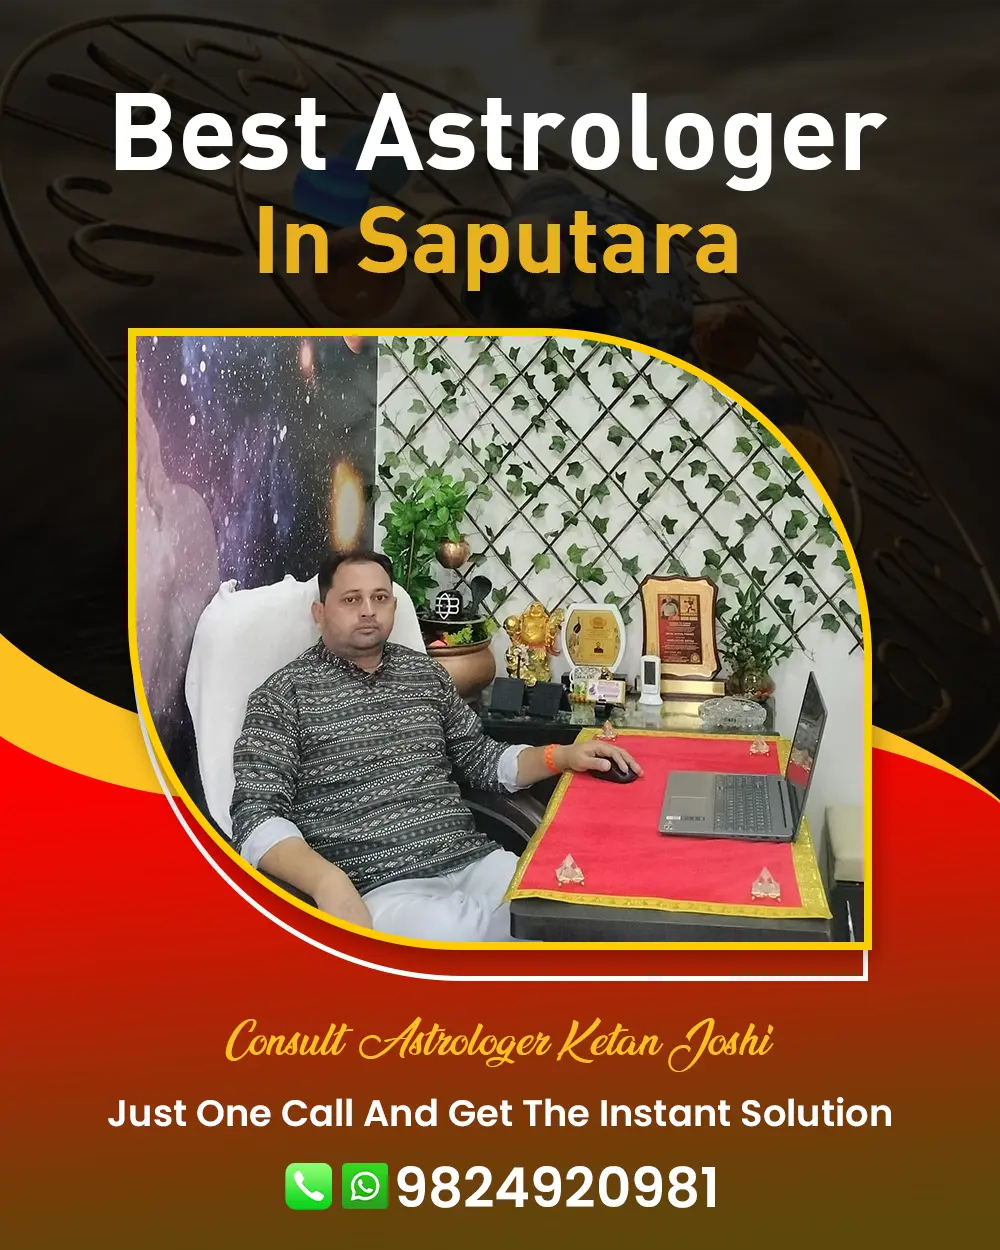 Best Astrologer In Saputara